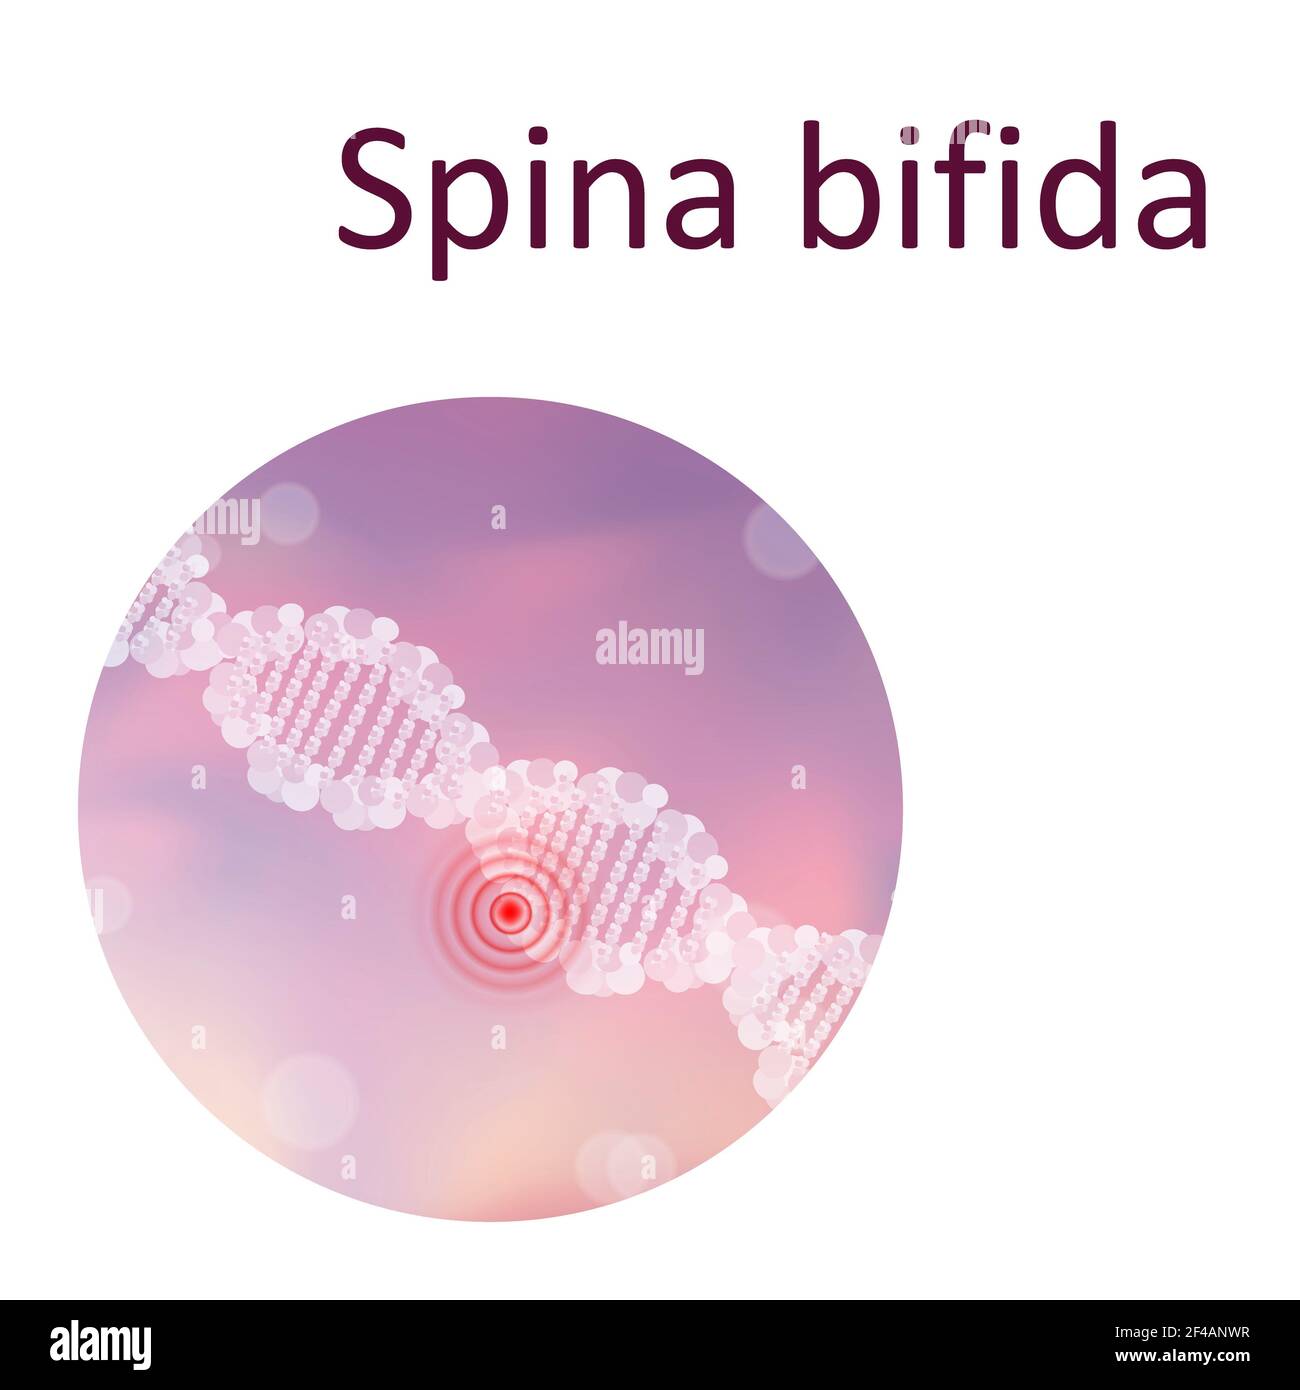 Spina bifida, illustration Stock Photo